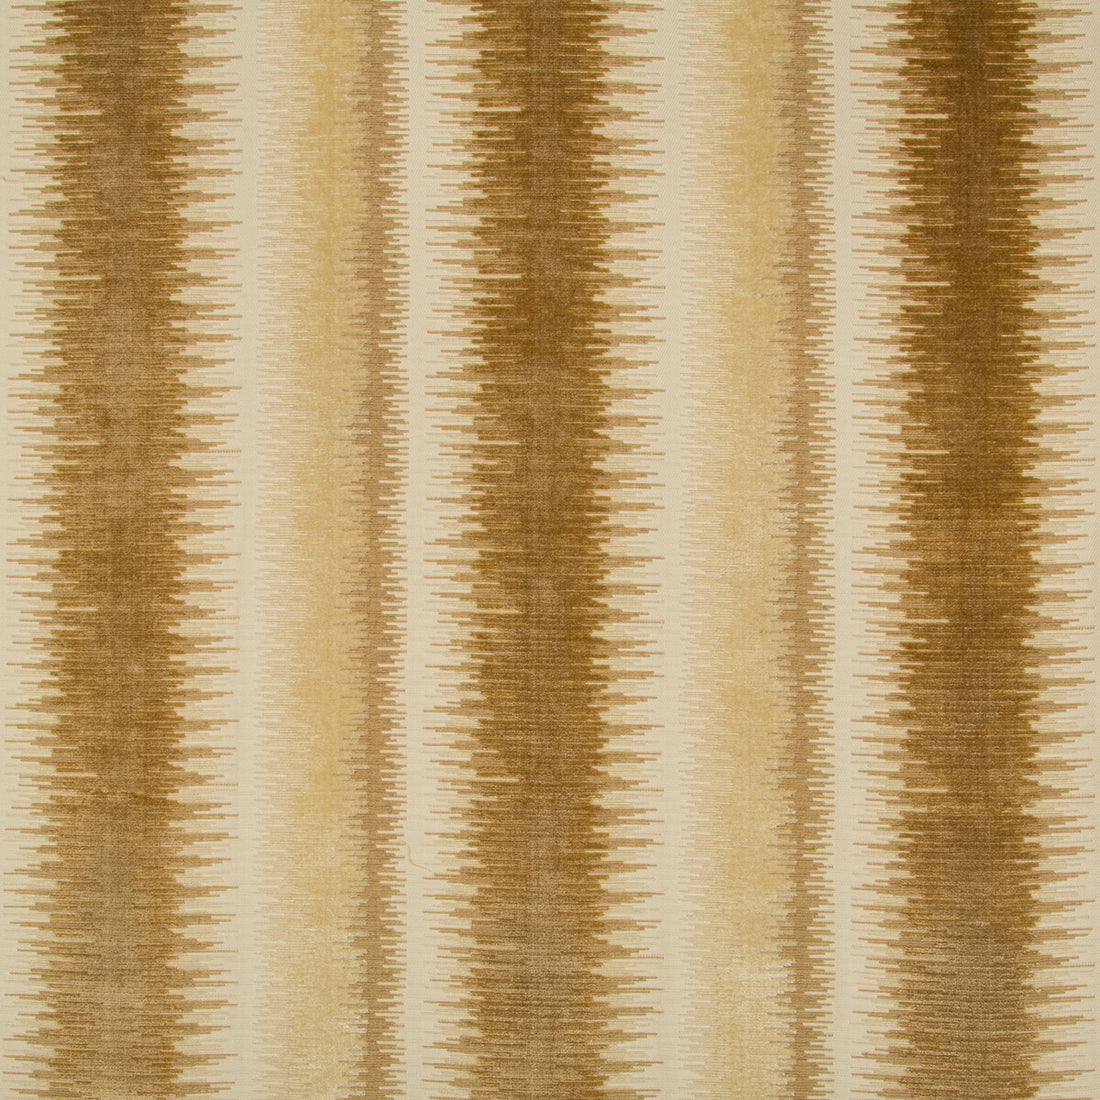 Bromo Velvet fabric in sand color - pattern 8018115.16.0 - by Brunschwig &amp; Fils in the Baret collection